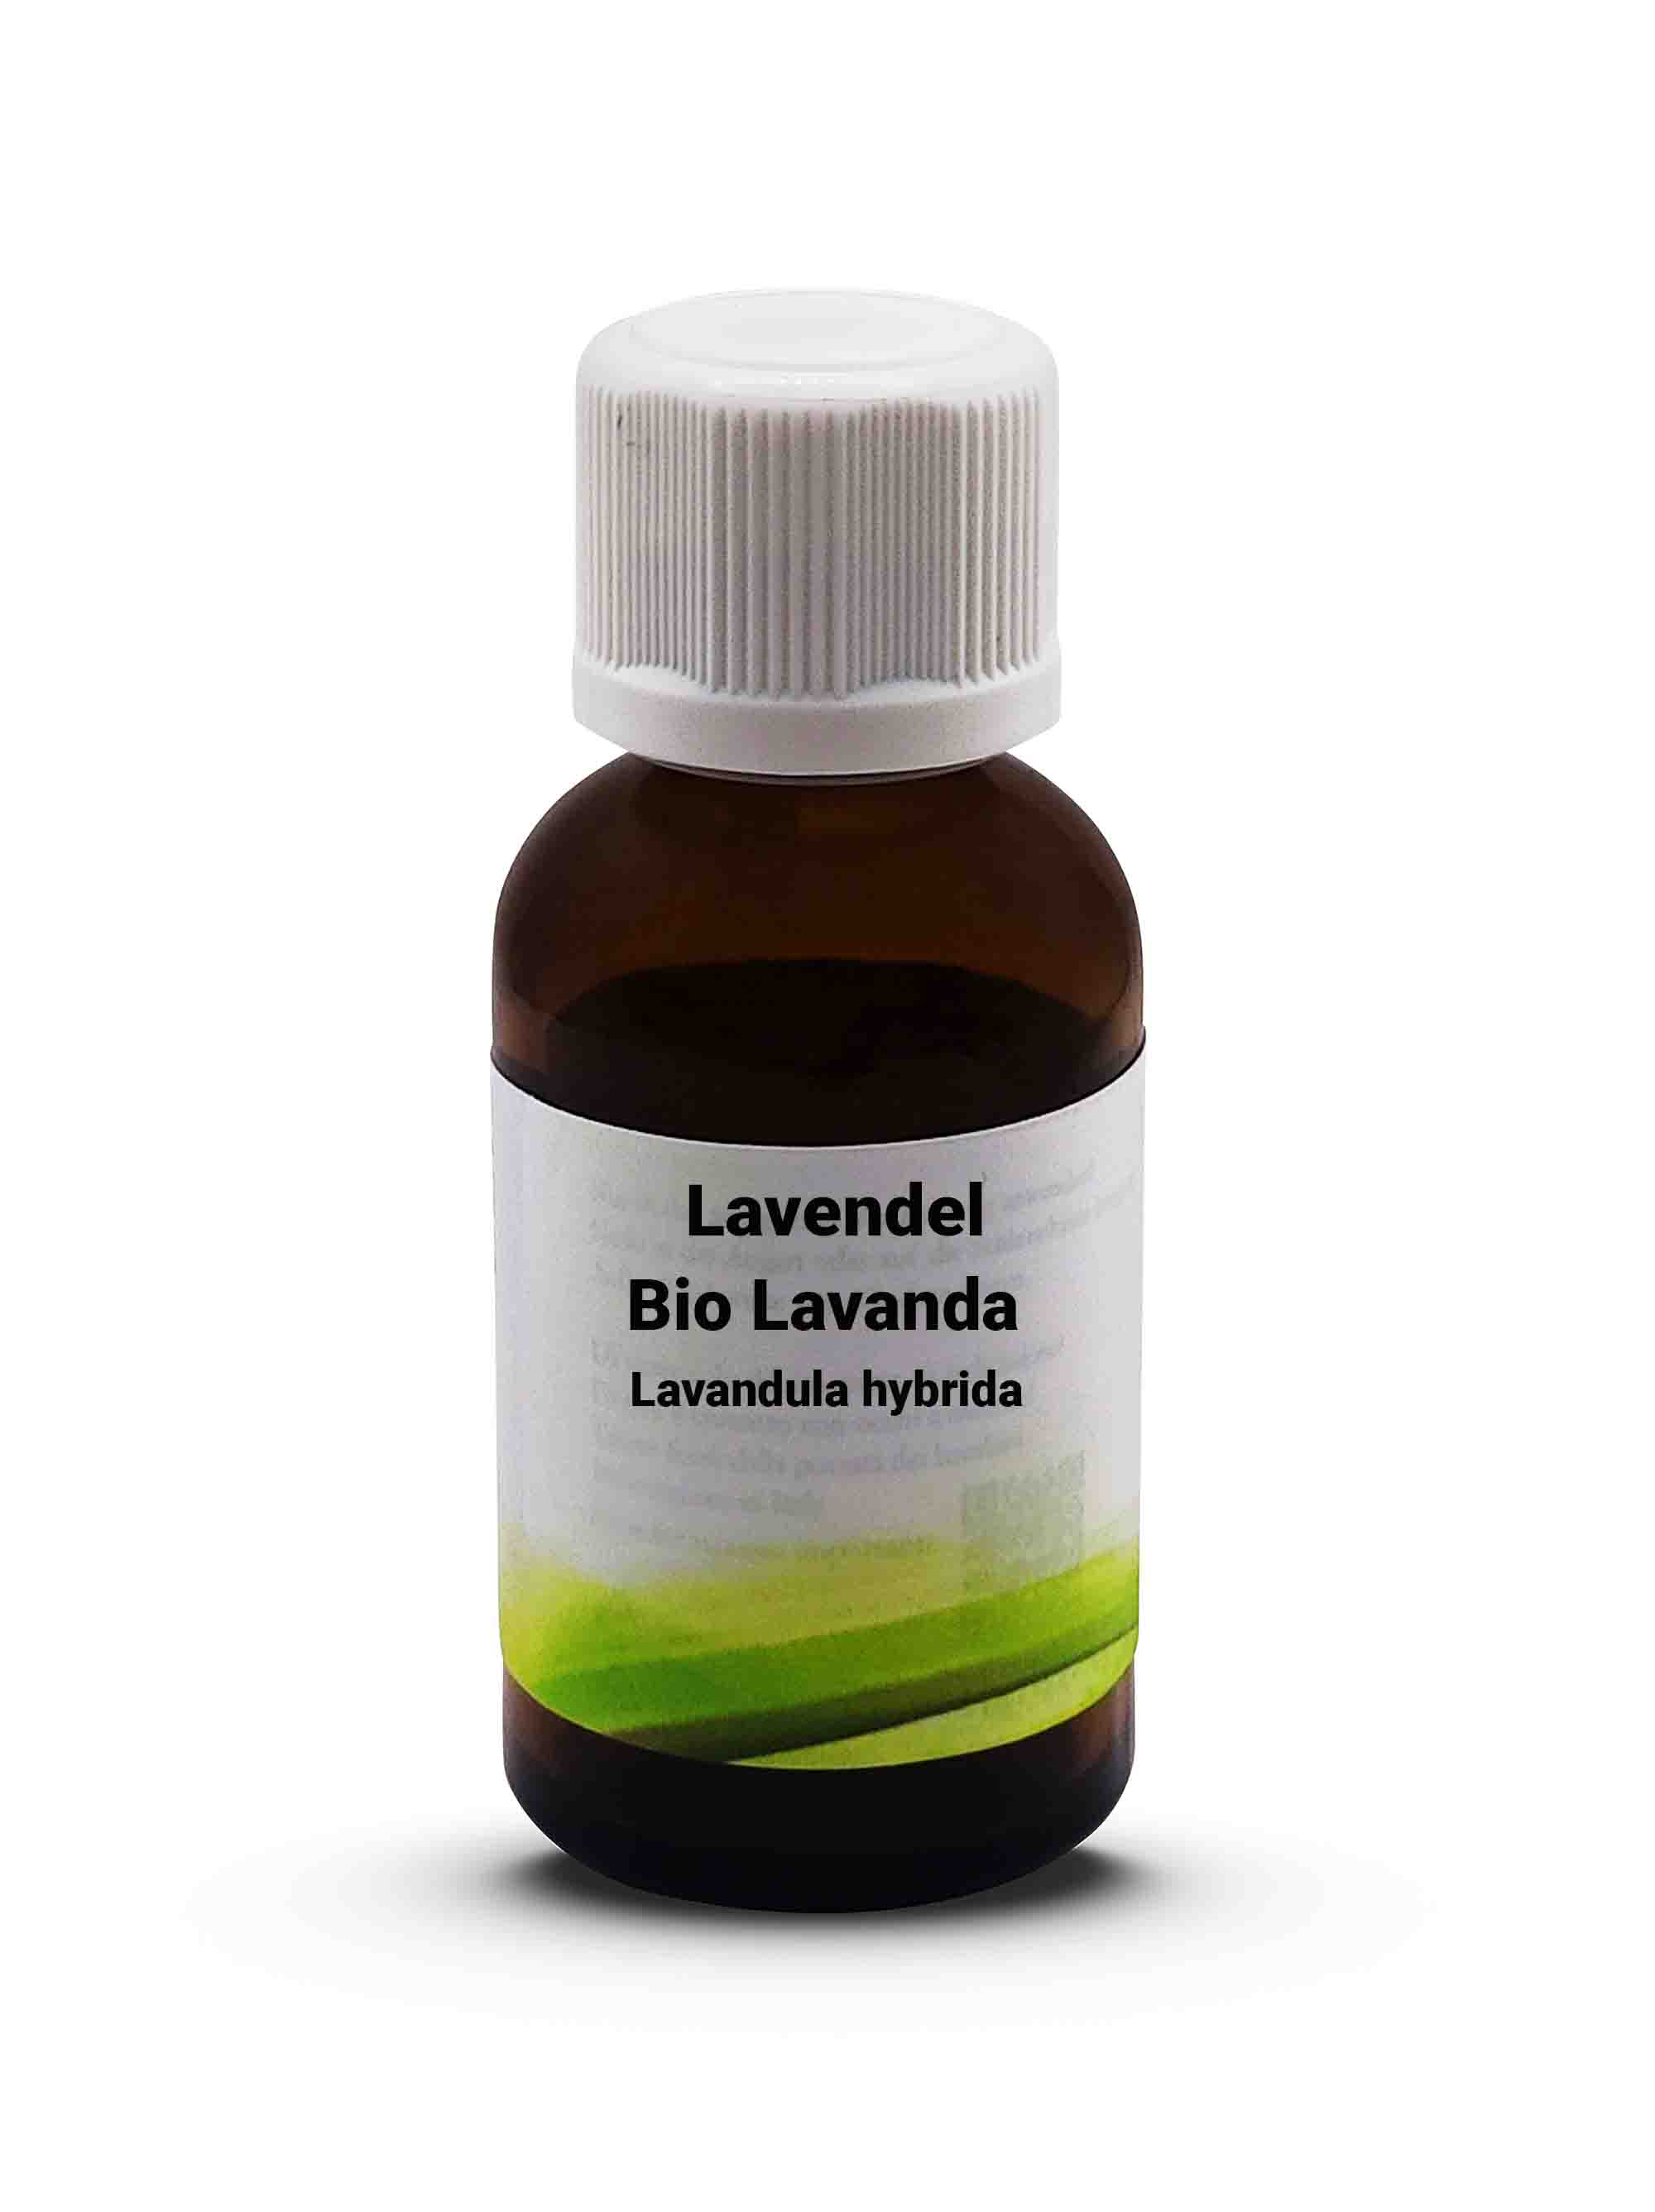 Bio Lavanda - Lavandula hybrida